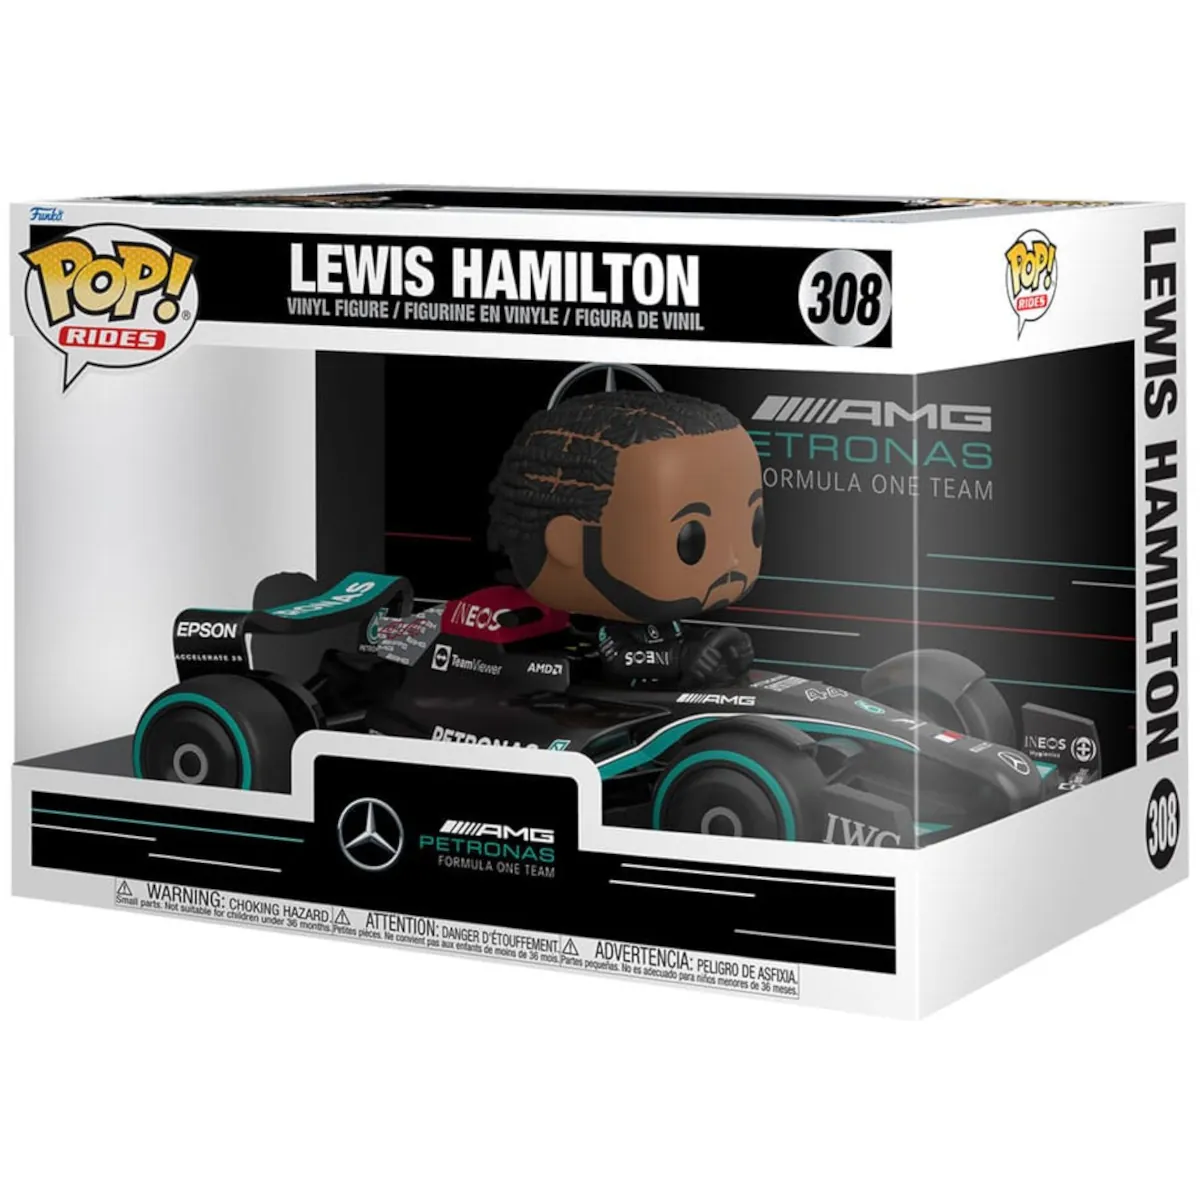 Funko Pop Rides Super Deluxe Mercedes-AMG Lewis Hamilton Car Collectable Vinyl Figure Box Front